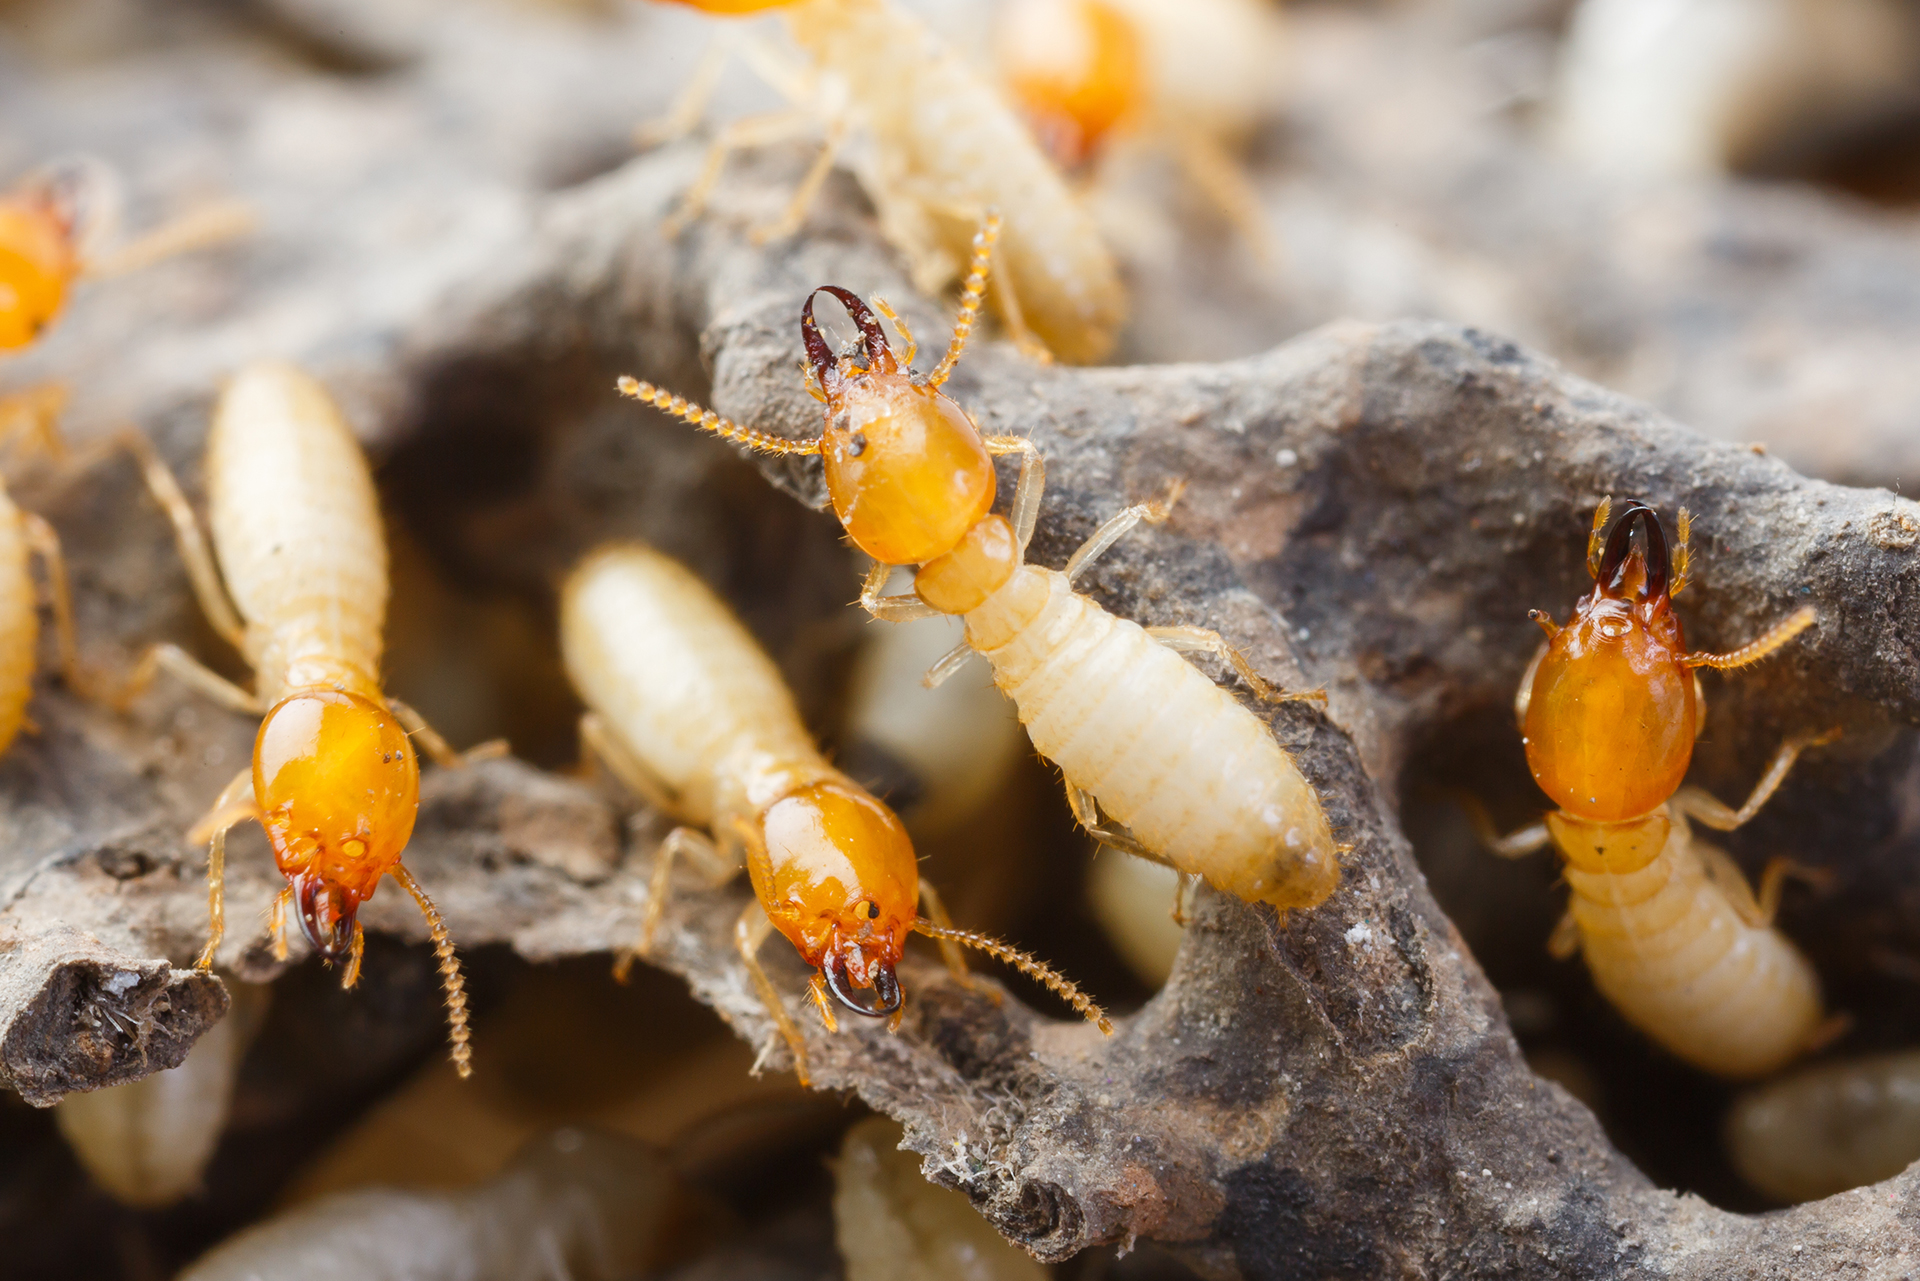 Termite Control Sydney